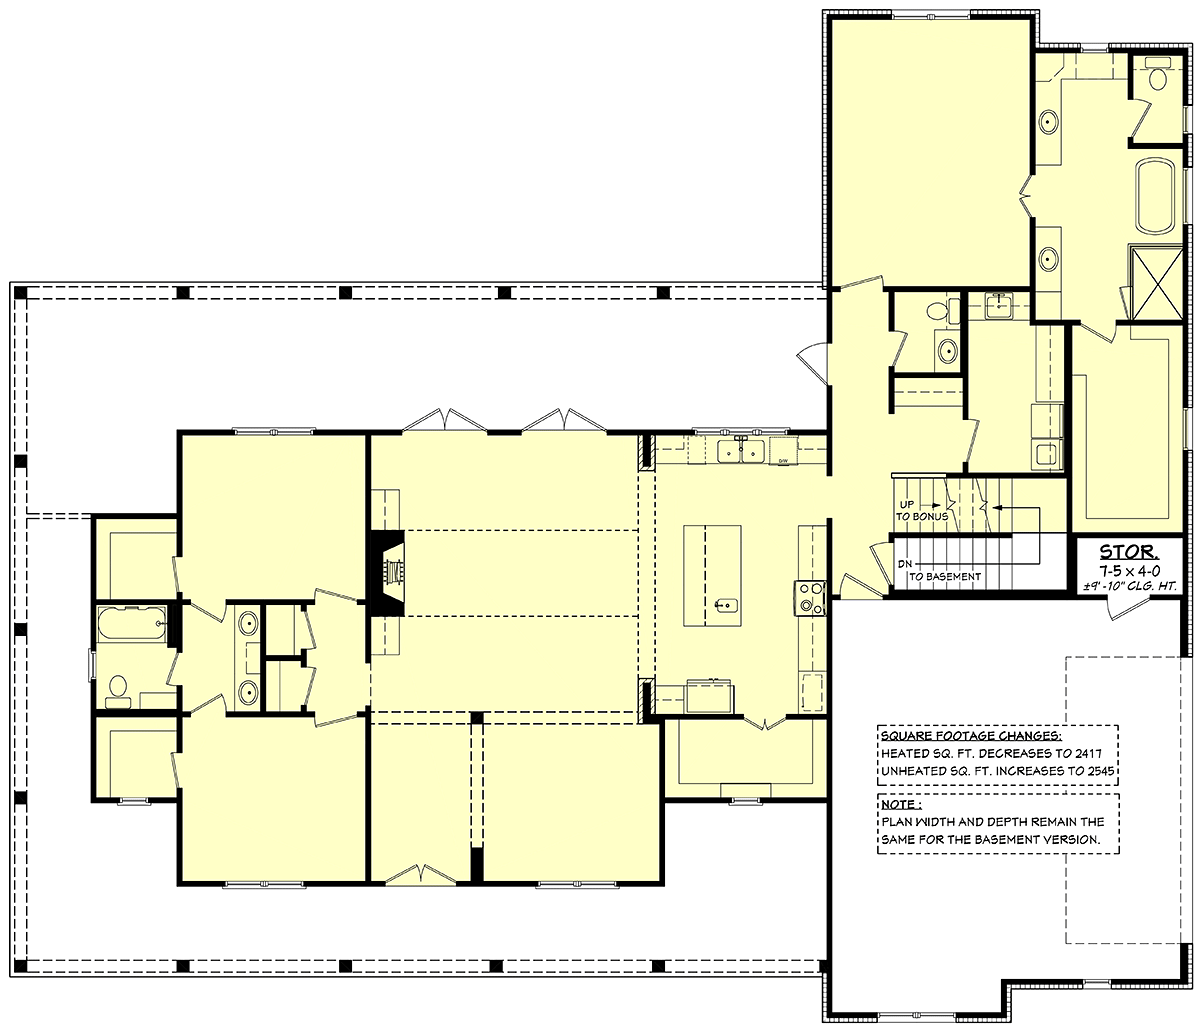 House Plan 80833 Alternate Level One